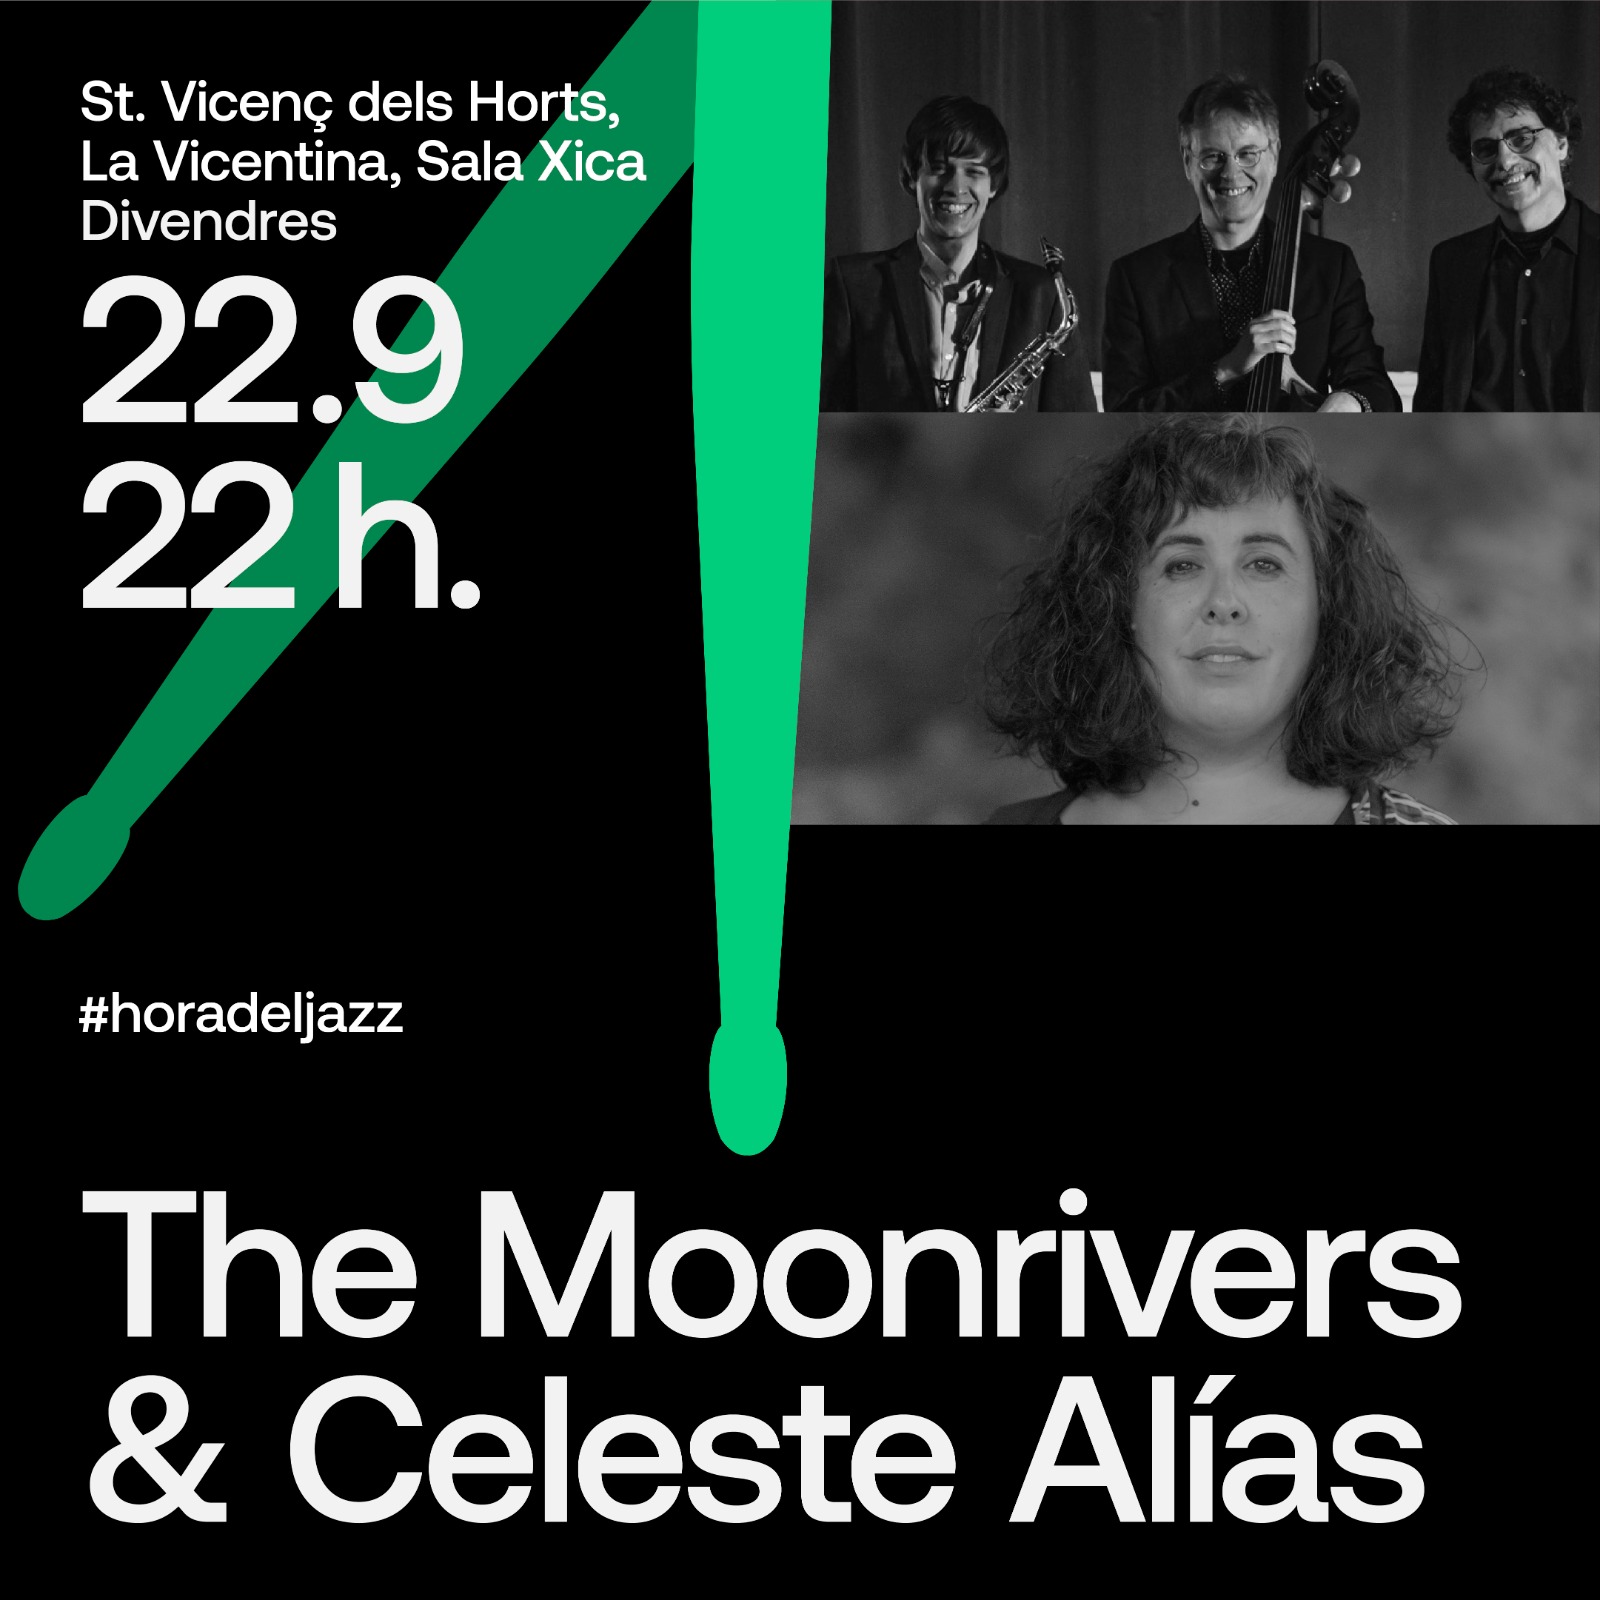 Concert The Moonrivers i Celeste Alías